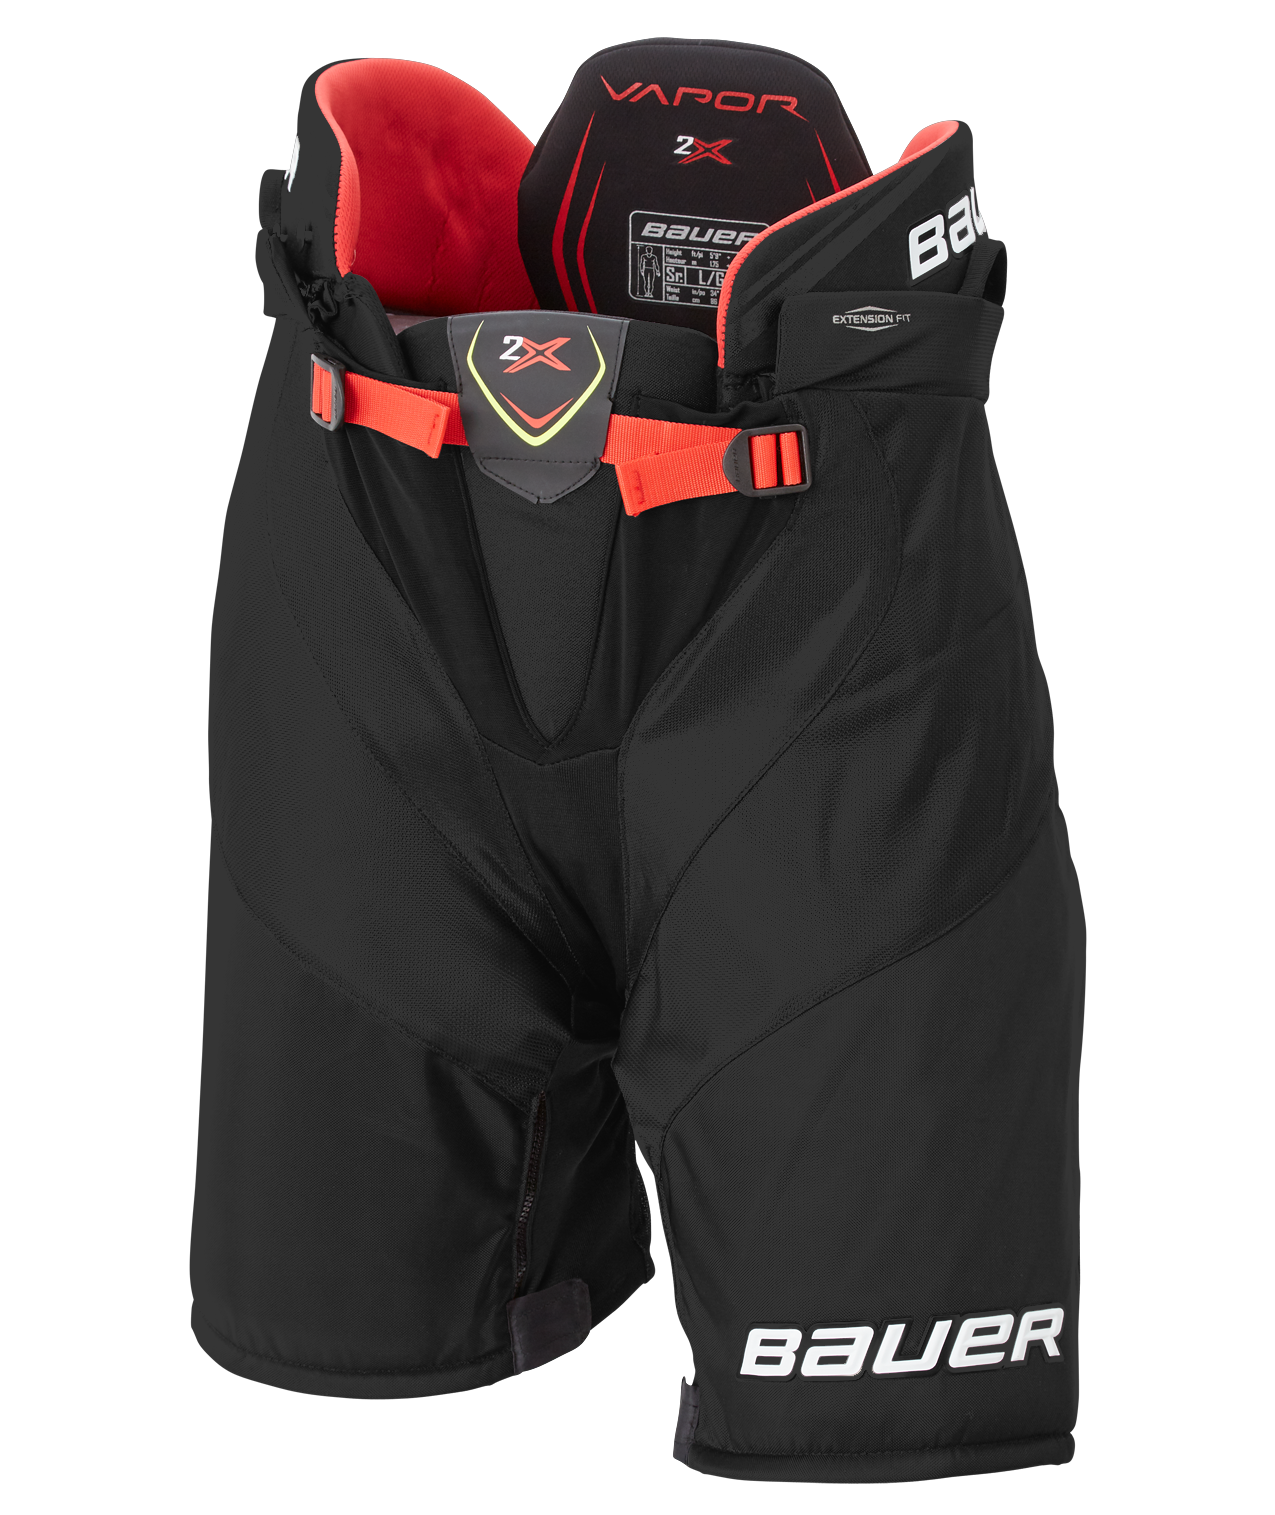 Hokejové nohavice Bauer Vapor 2X SR